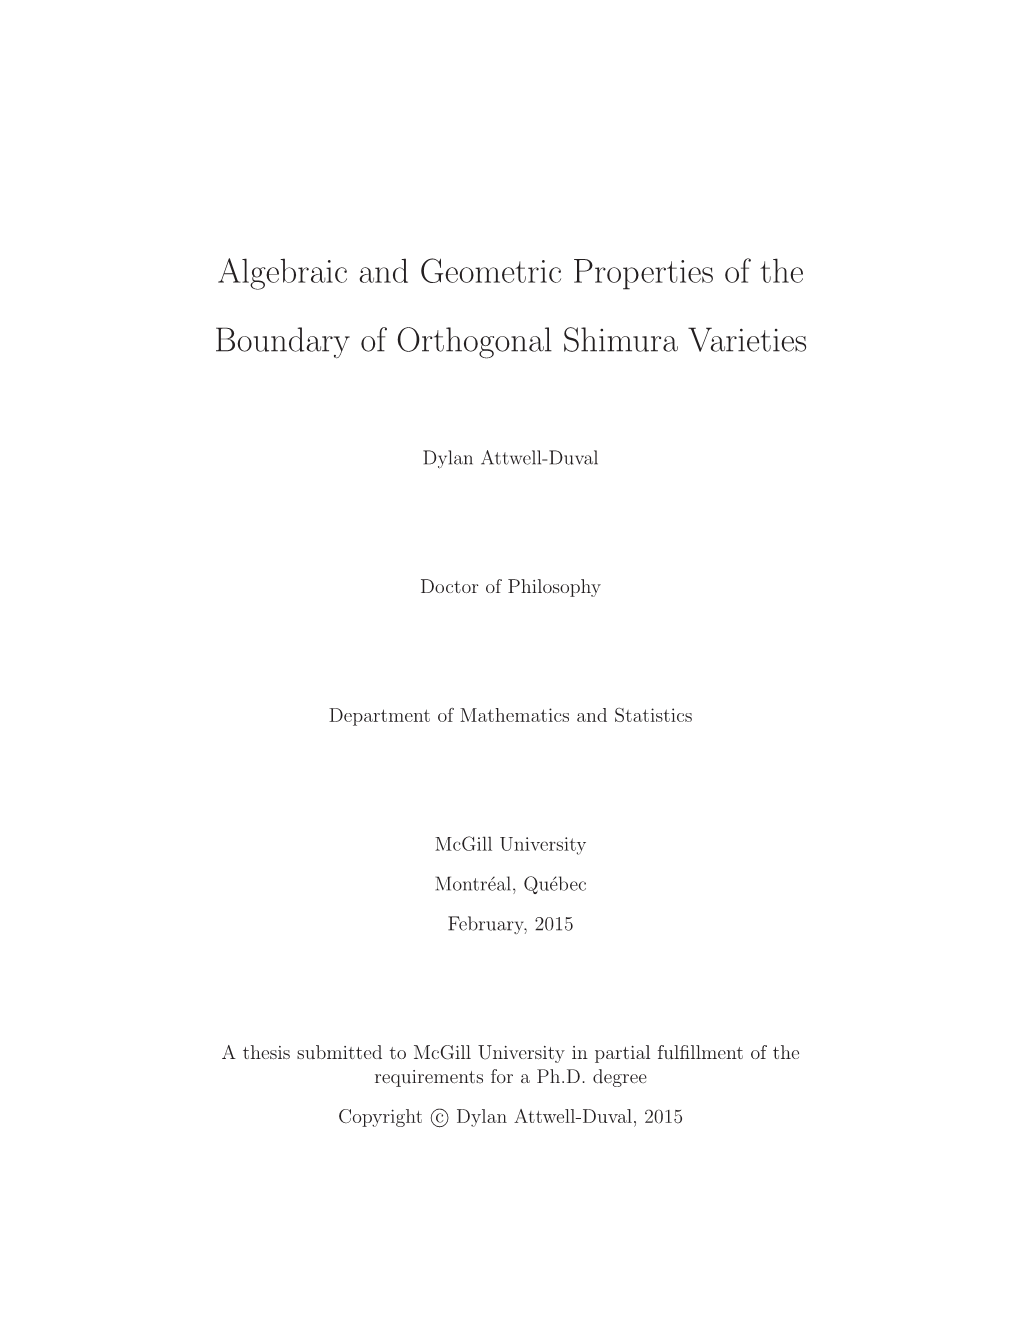 Algebraic and Geometric Properties of the Boundary of Orthogonal Shimura Varieties